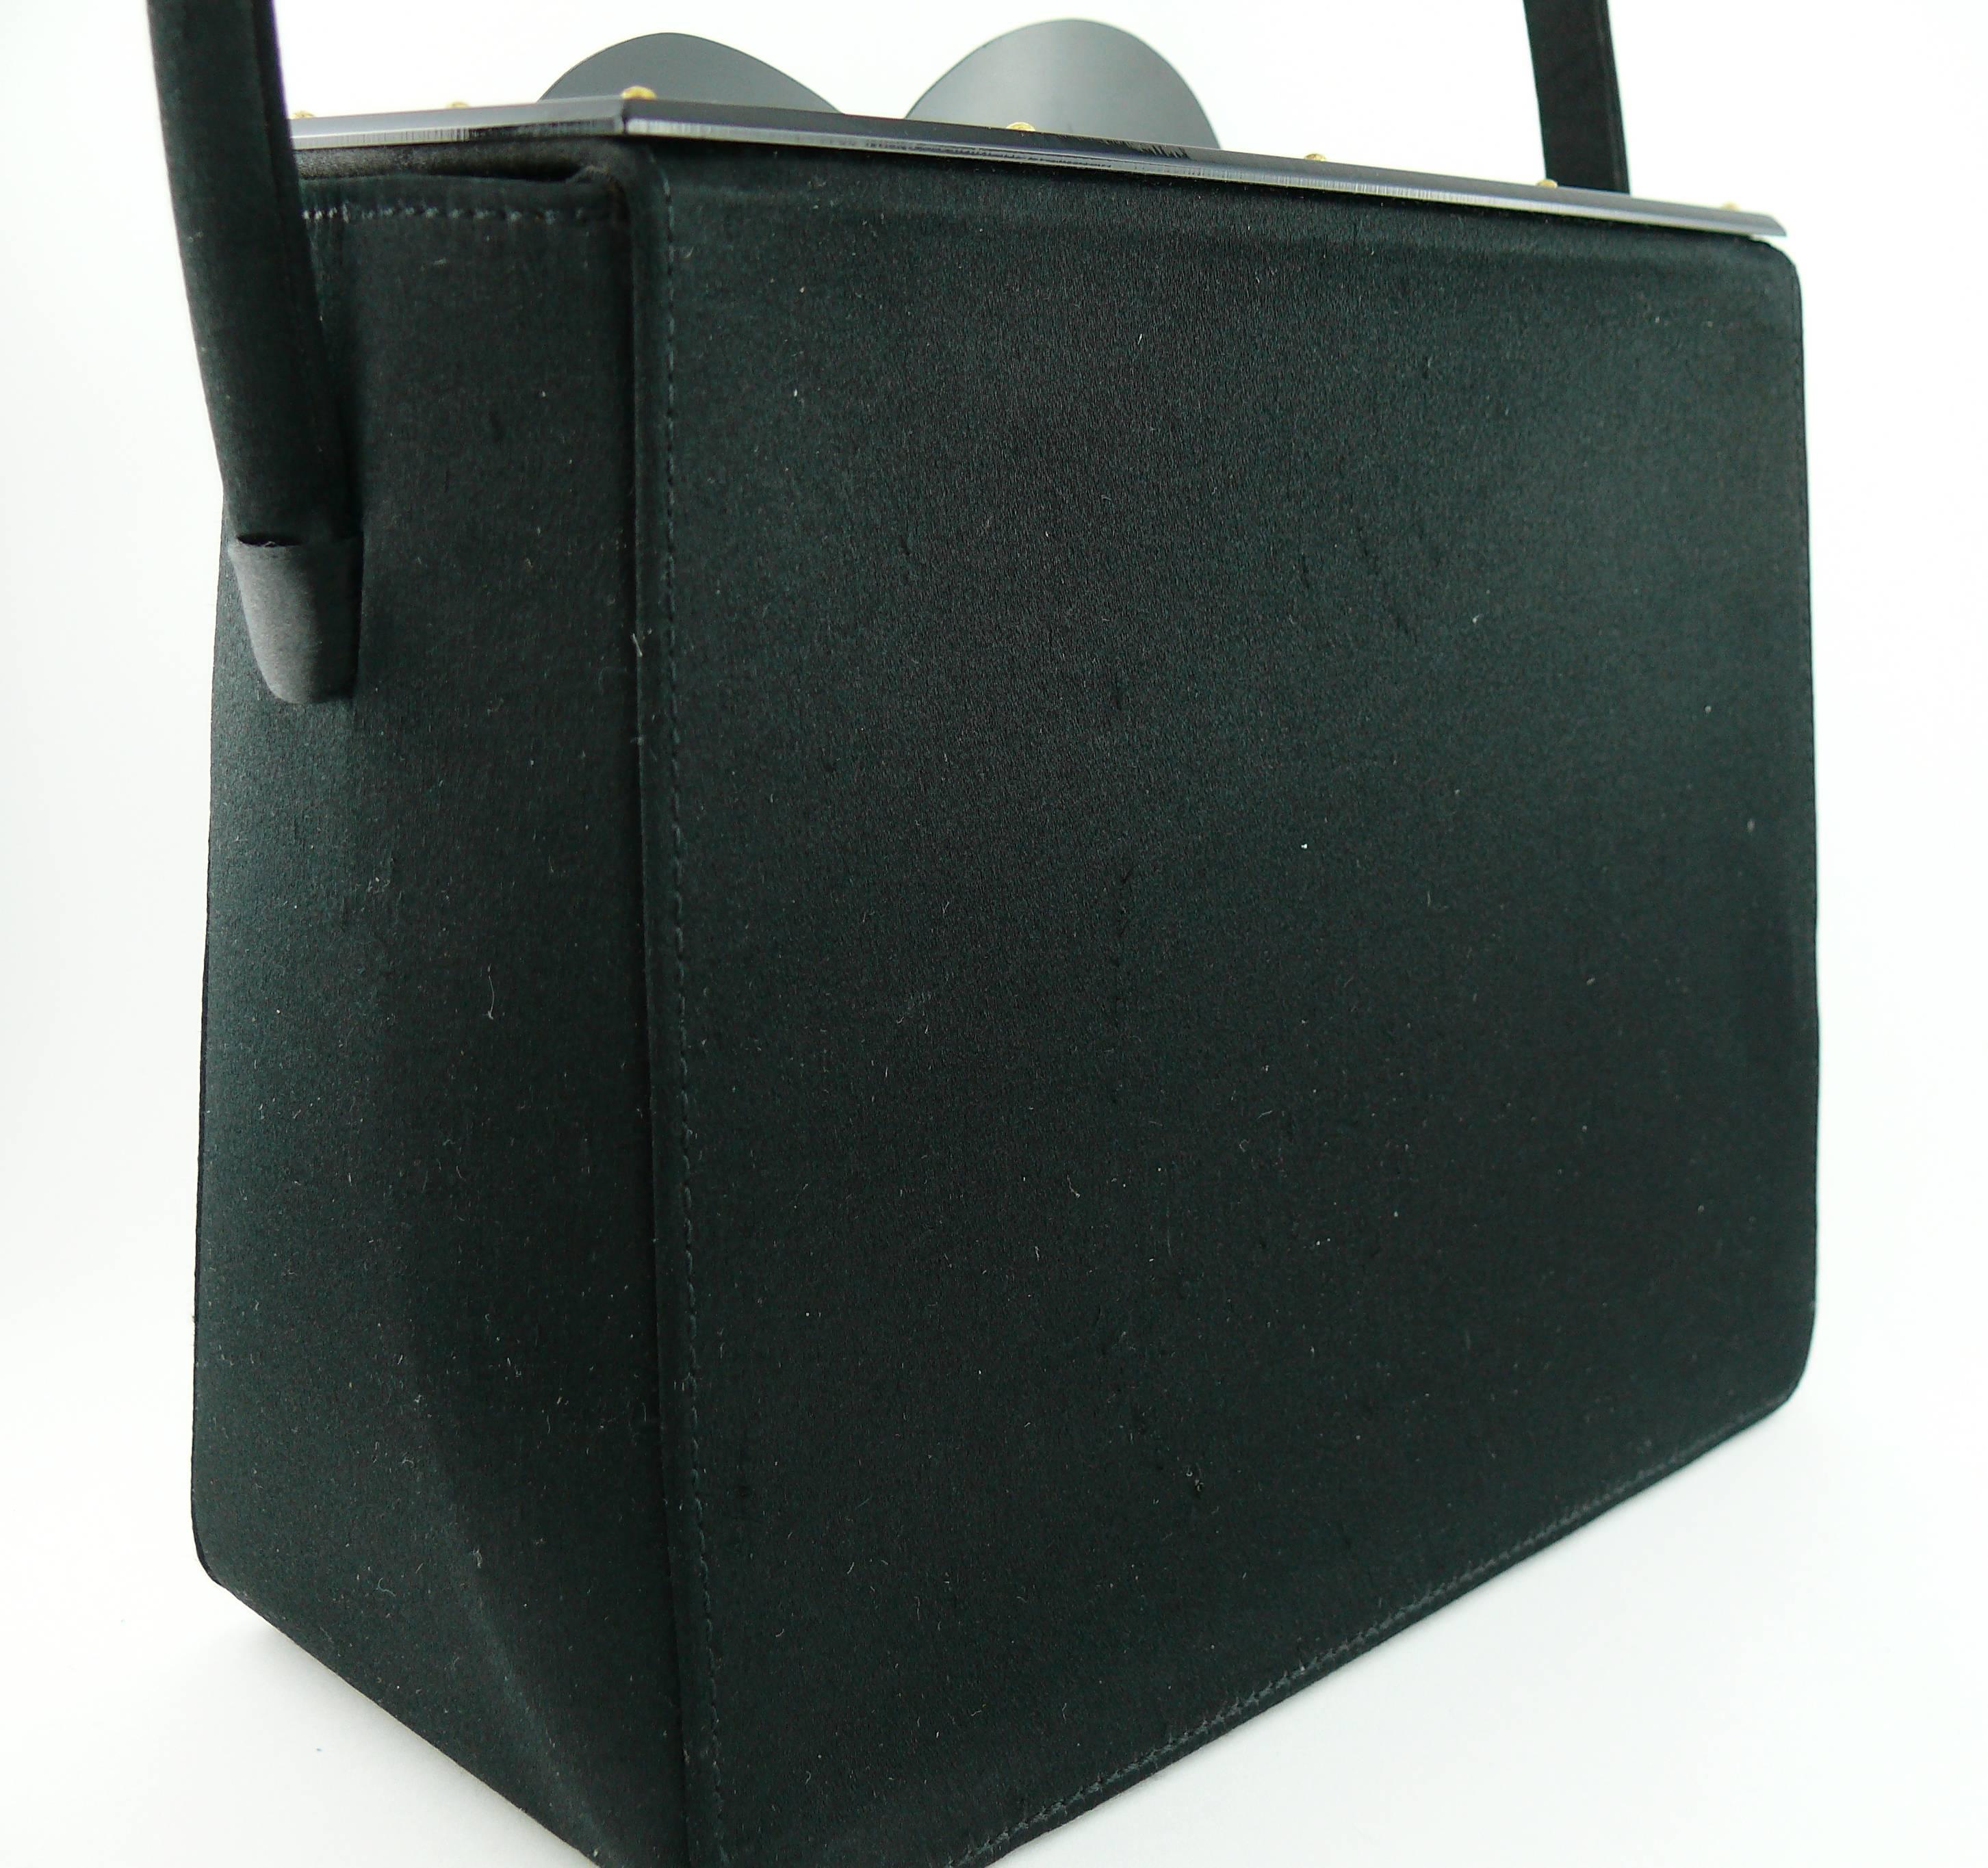 Yves Saint Laurent YSL Vintage Iconic Black Box Handbag with Lucite Heart Clasp 1